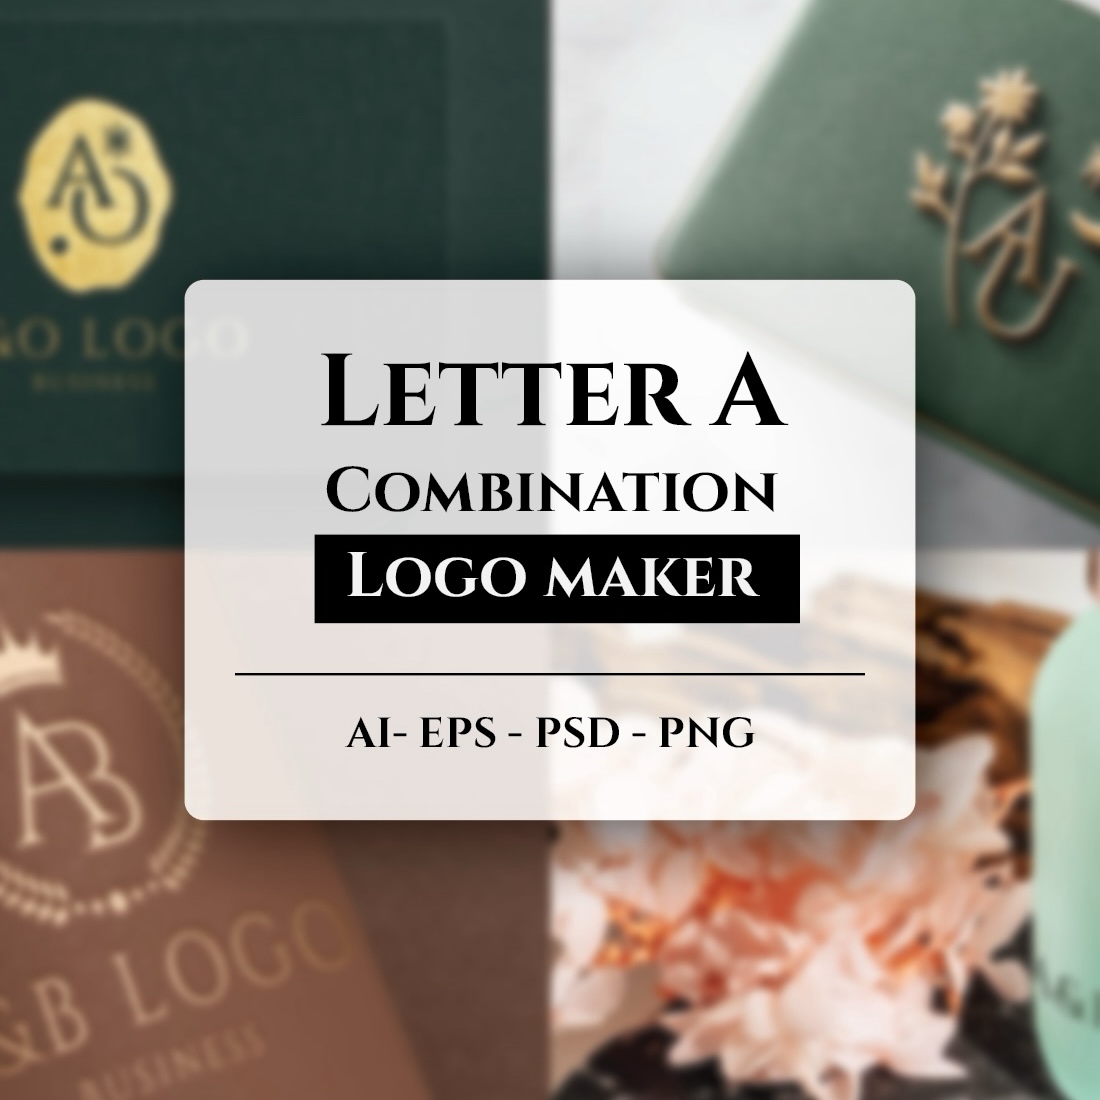 Letter A Combination Logo Maker Pack cover image.